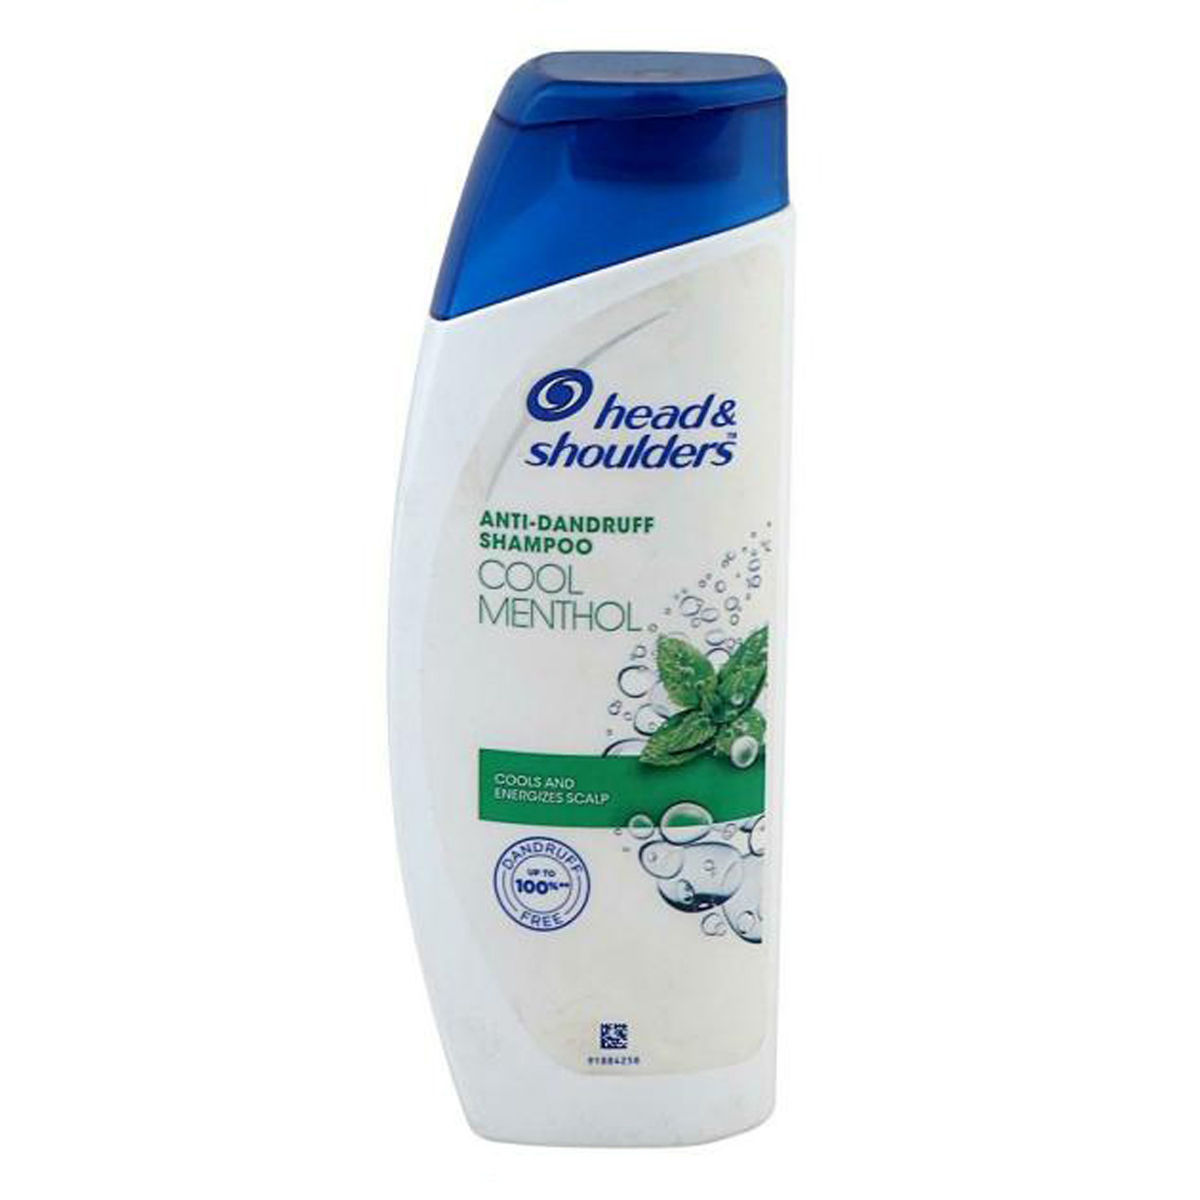 Head & Shoulders Anti-Dandruff Max Cool Shampoo, 180 ml, Pack of 1 